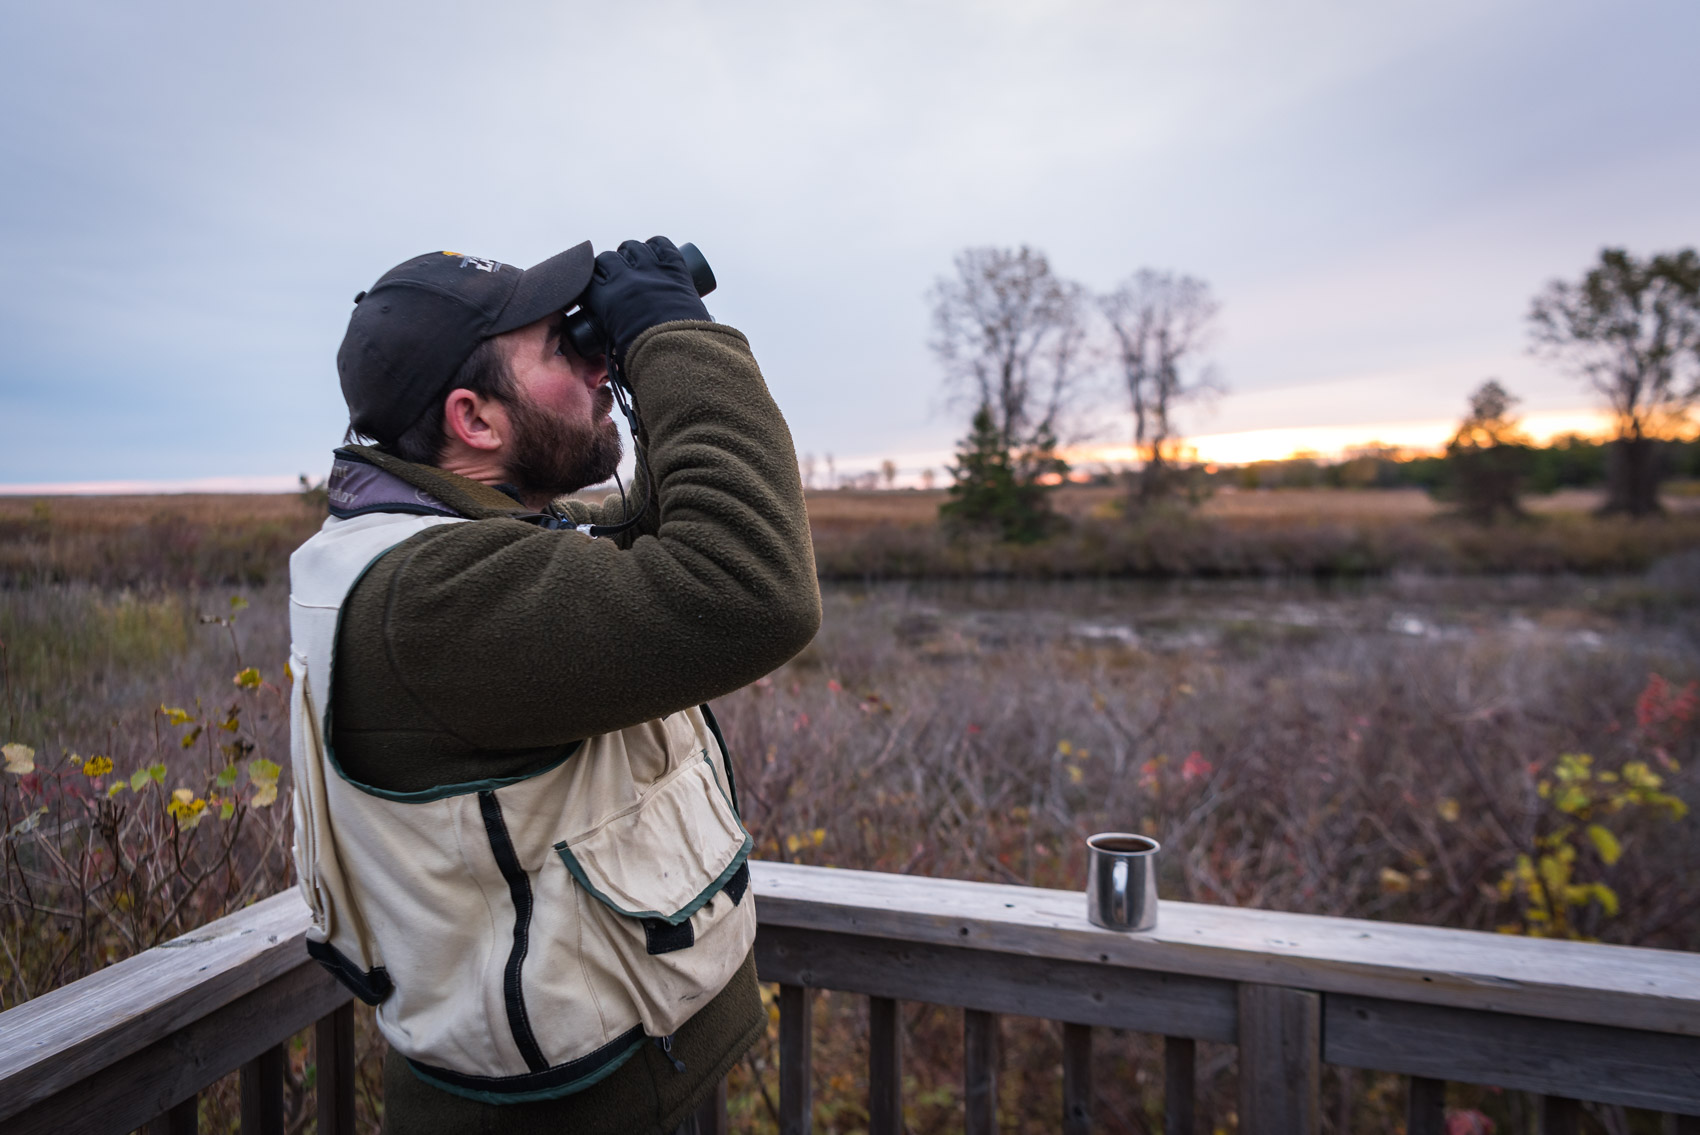 Long Point Bird Observatory coordinator looking through binoculars on a viewing platform